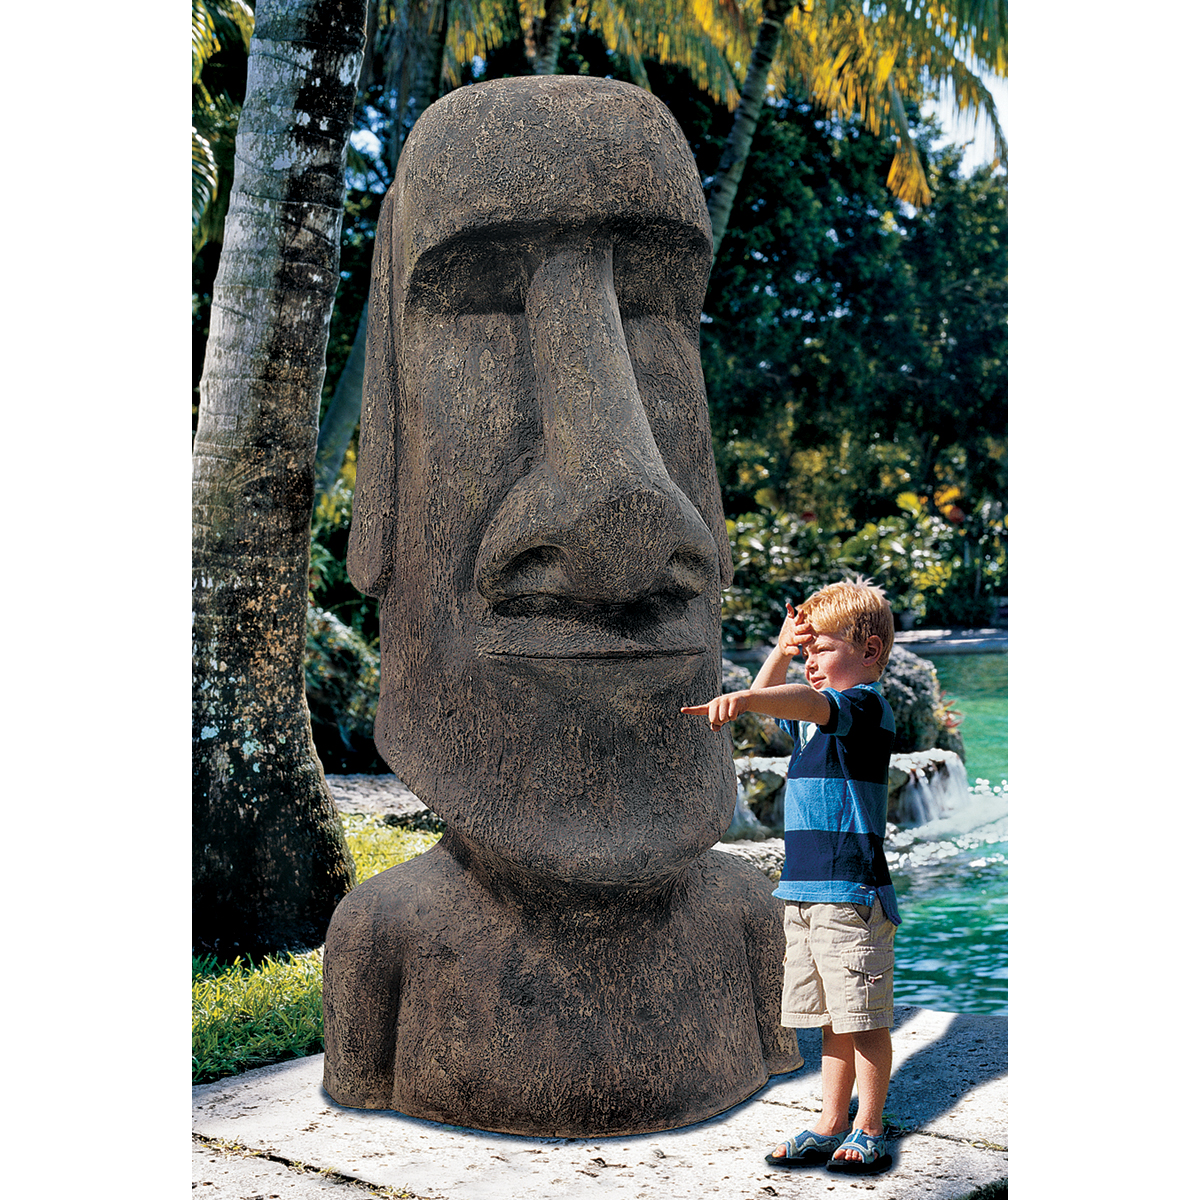 Moai Monolith Statue of Easter Island Ahu Akivi